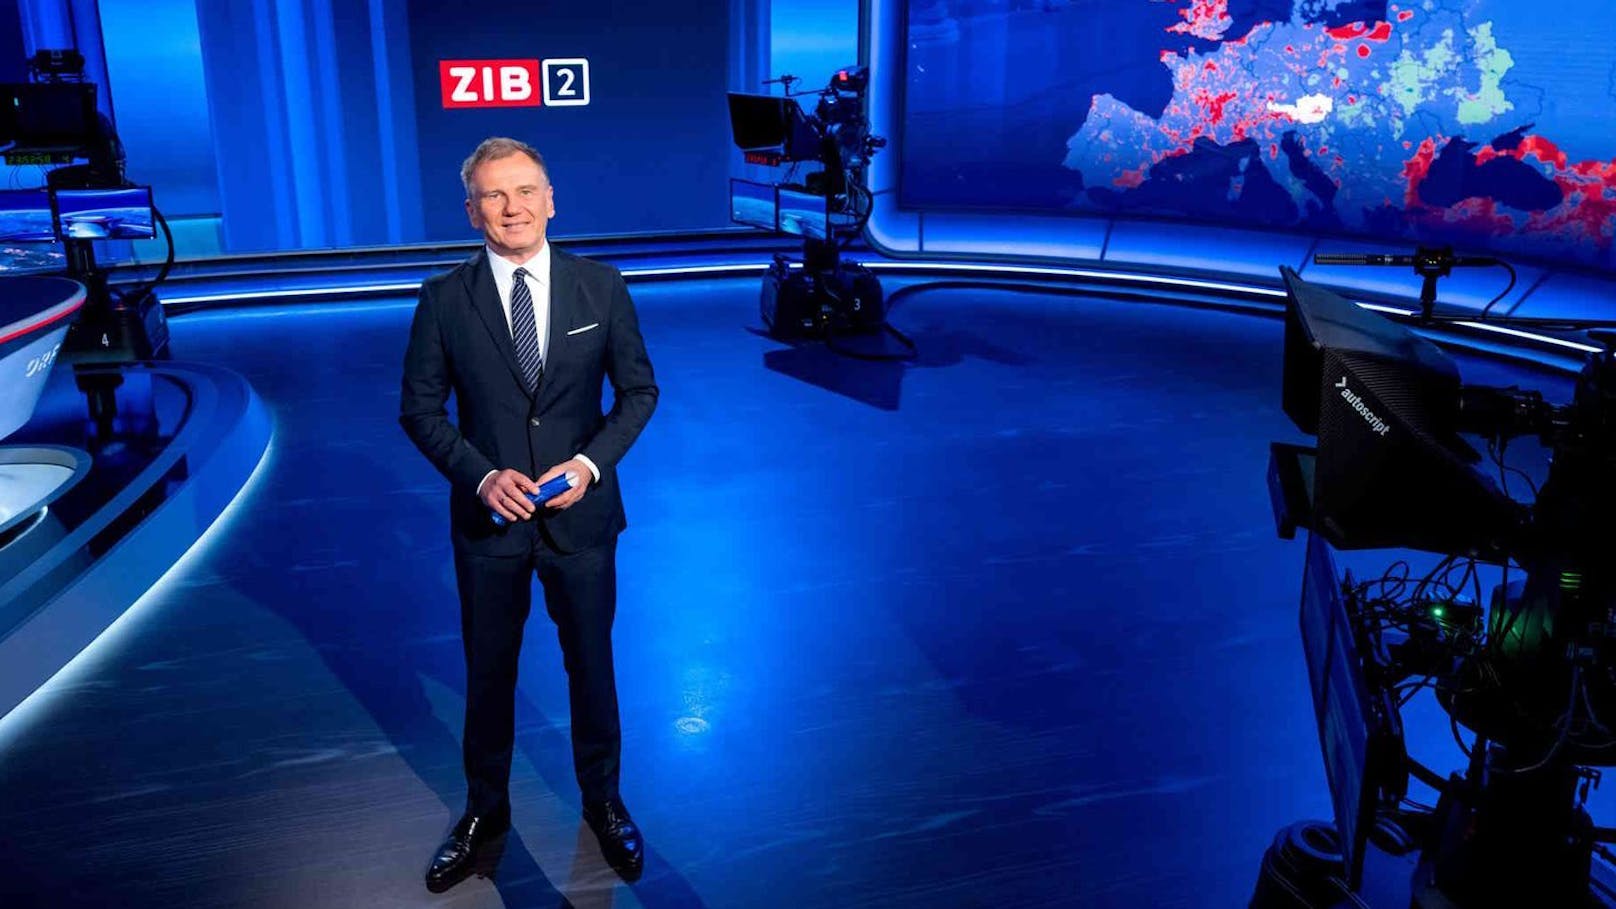 ORF-Star Armin Wolf moderiert völlig neue Sendung